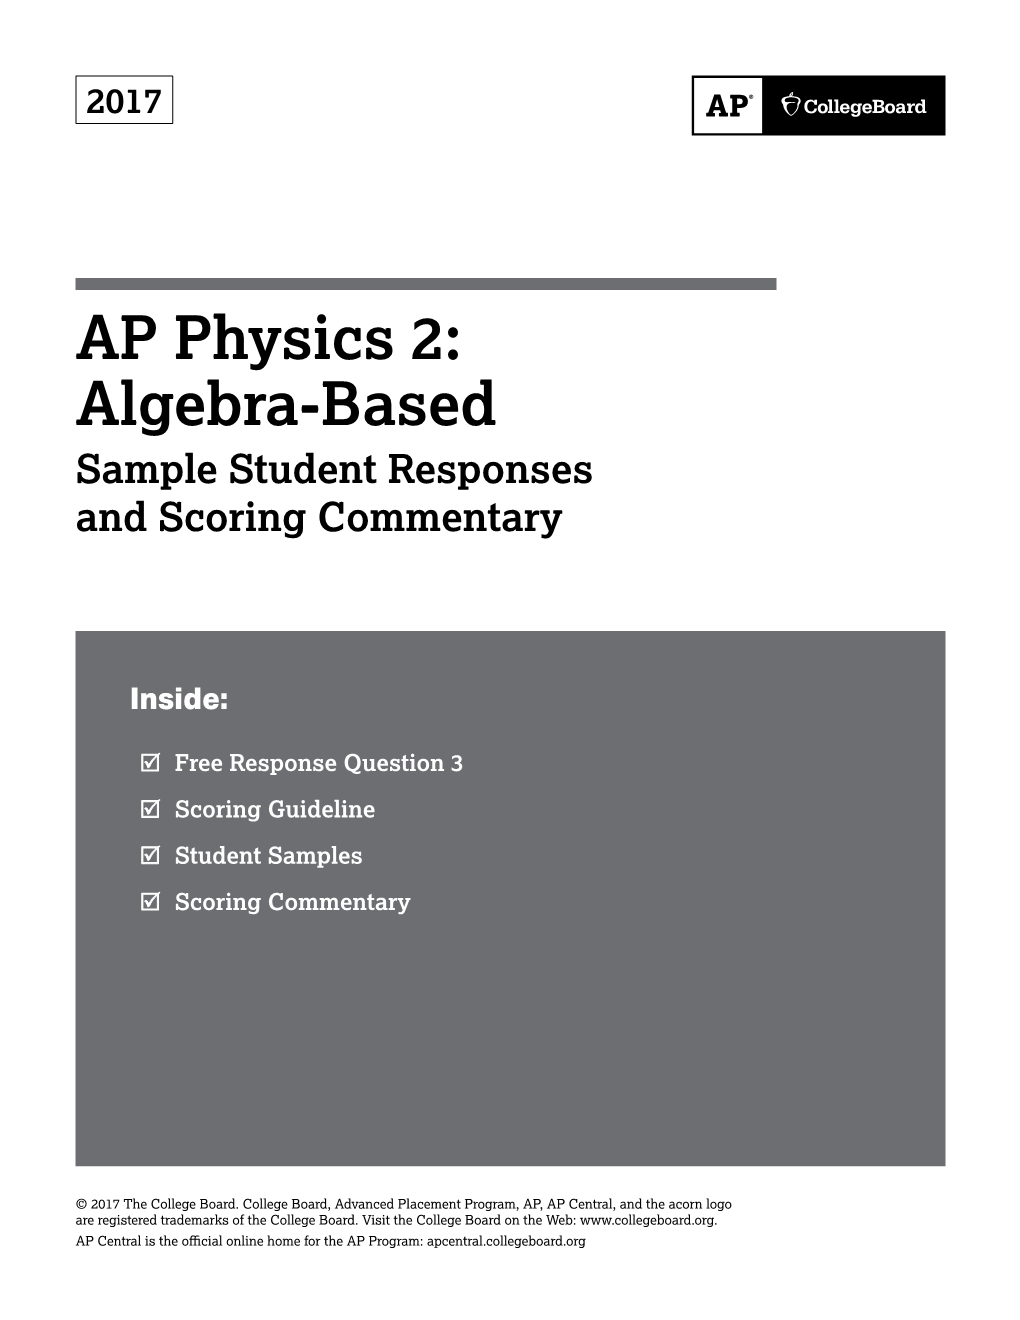 AP Physics 2 Student Sample Responses To